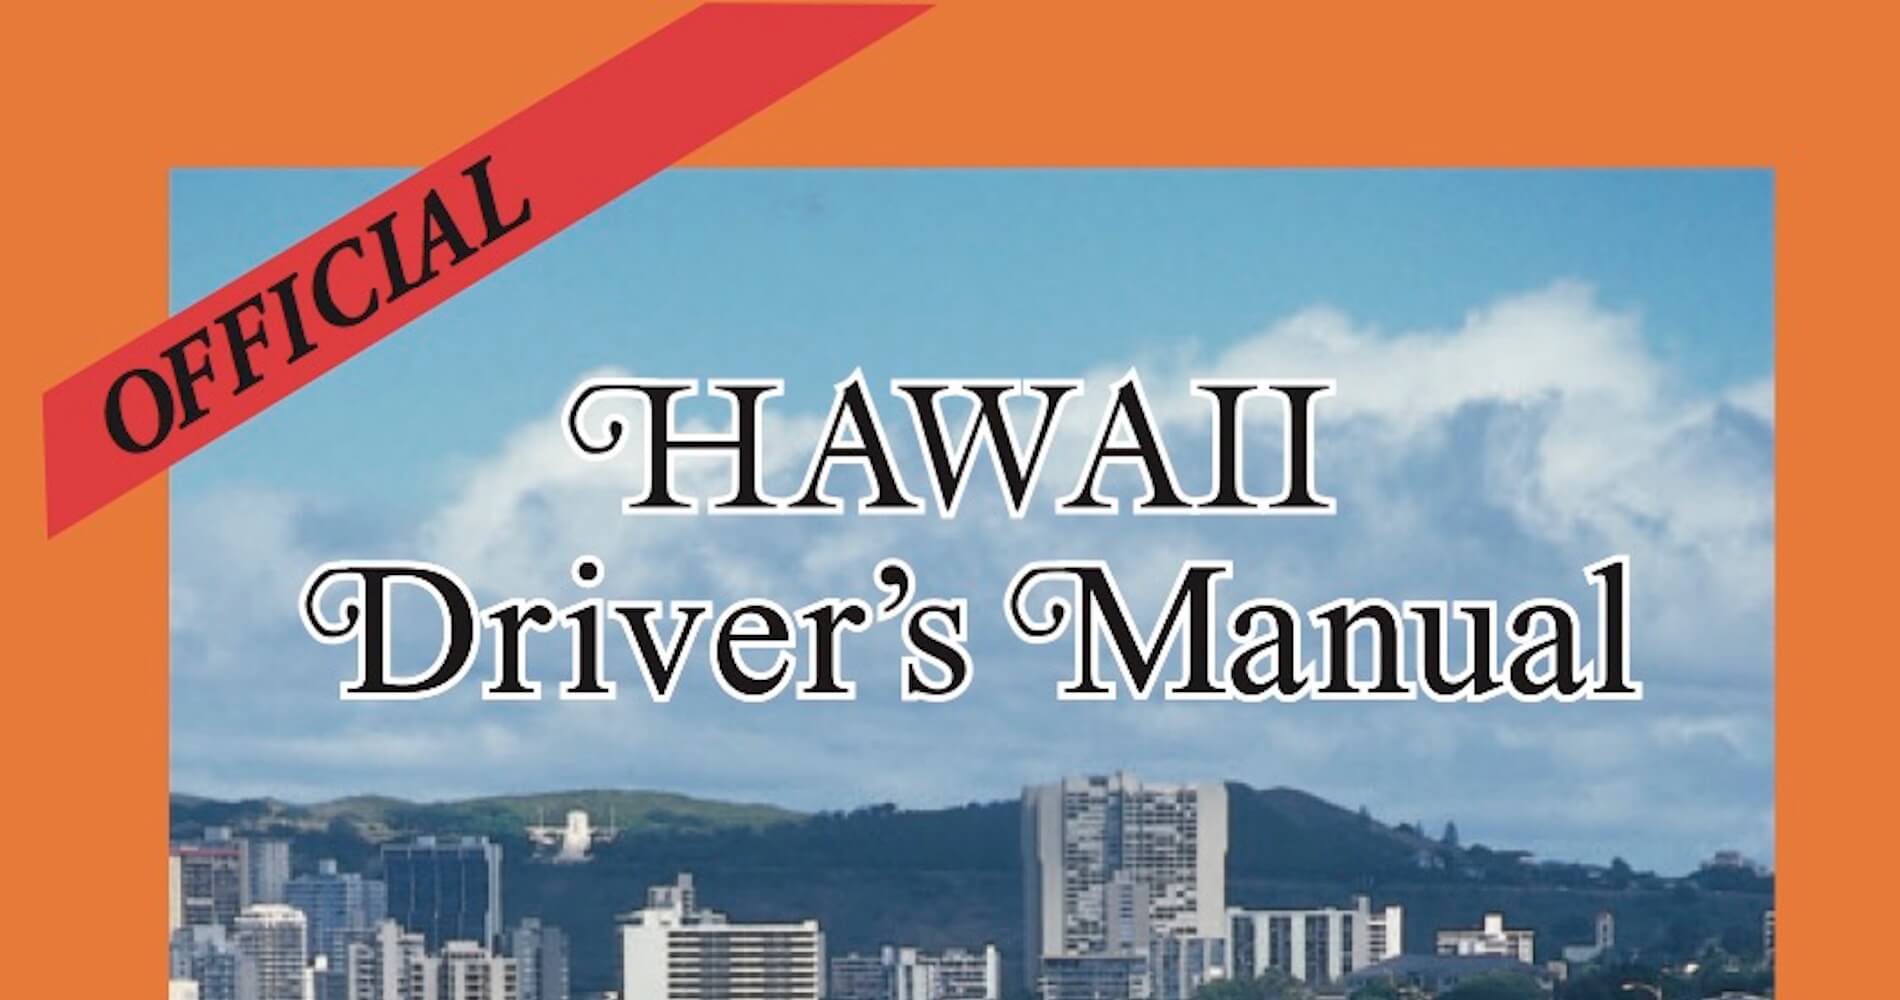 hawaii drivers license permit application